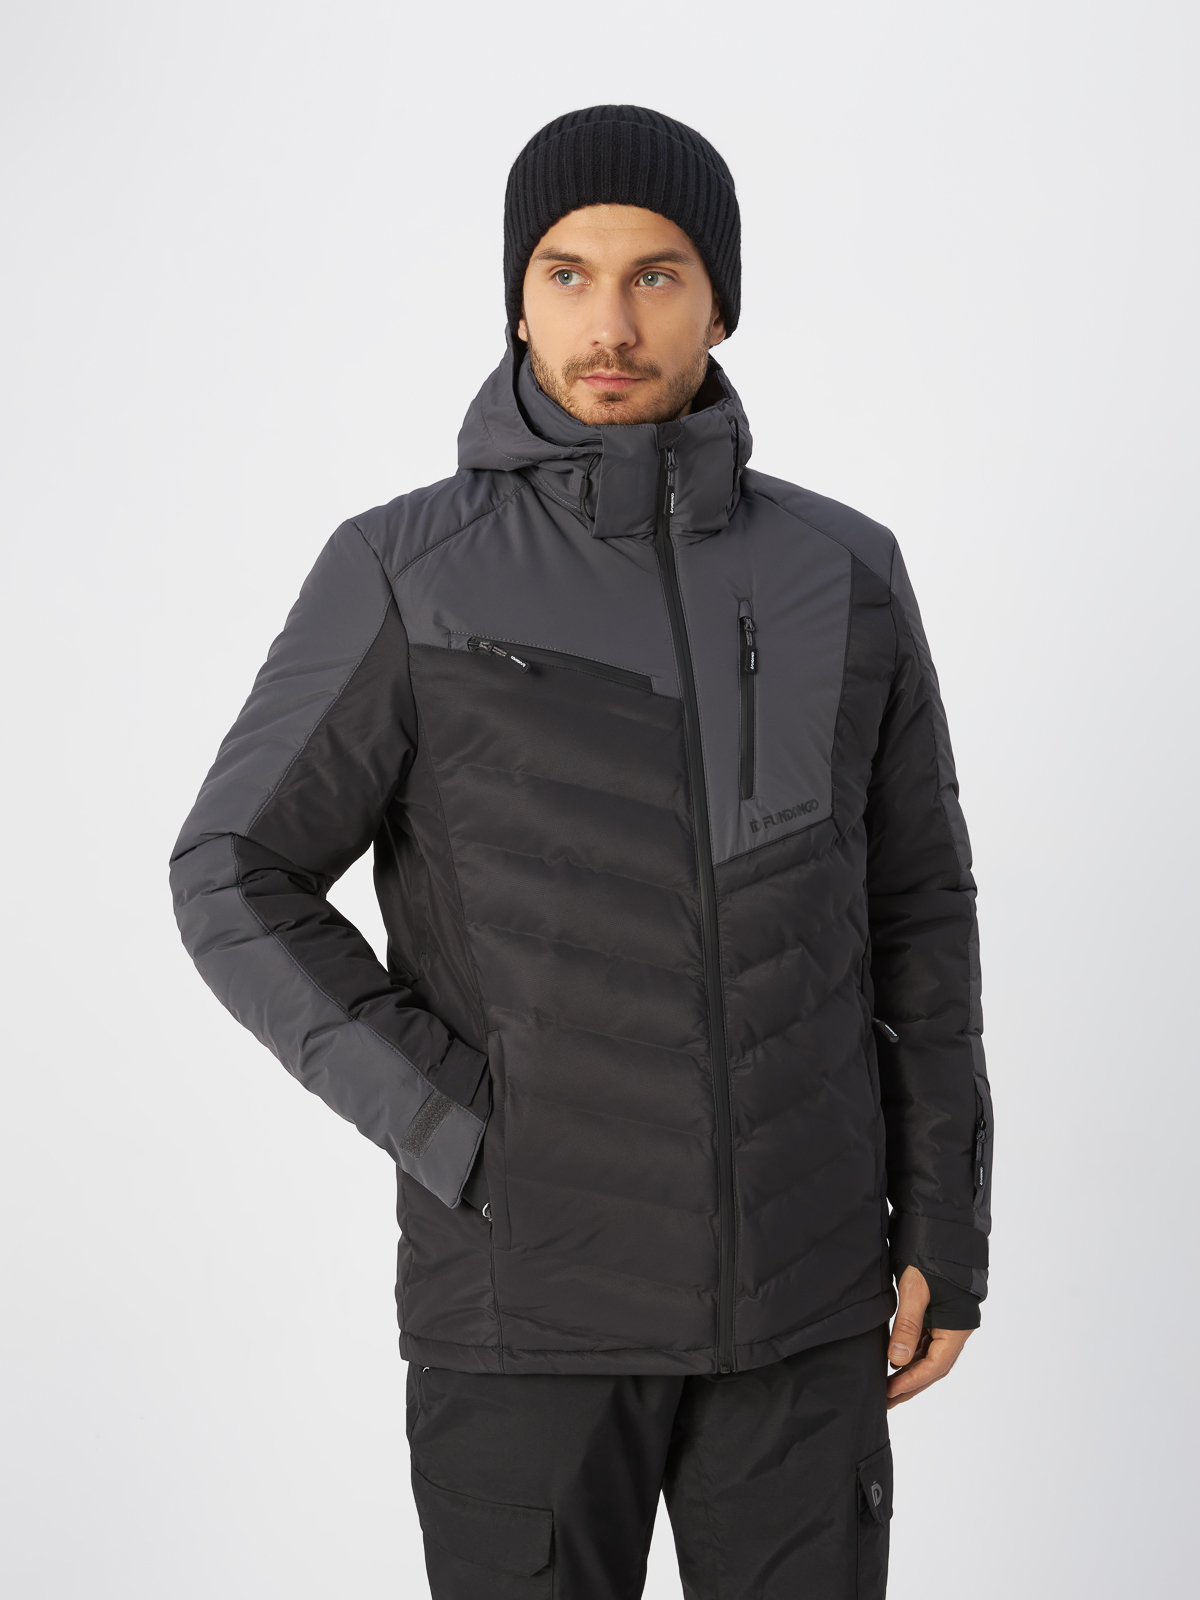 Куртка Fundango для мужчин, размер XL, 1QB106, чёрно-серая